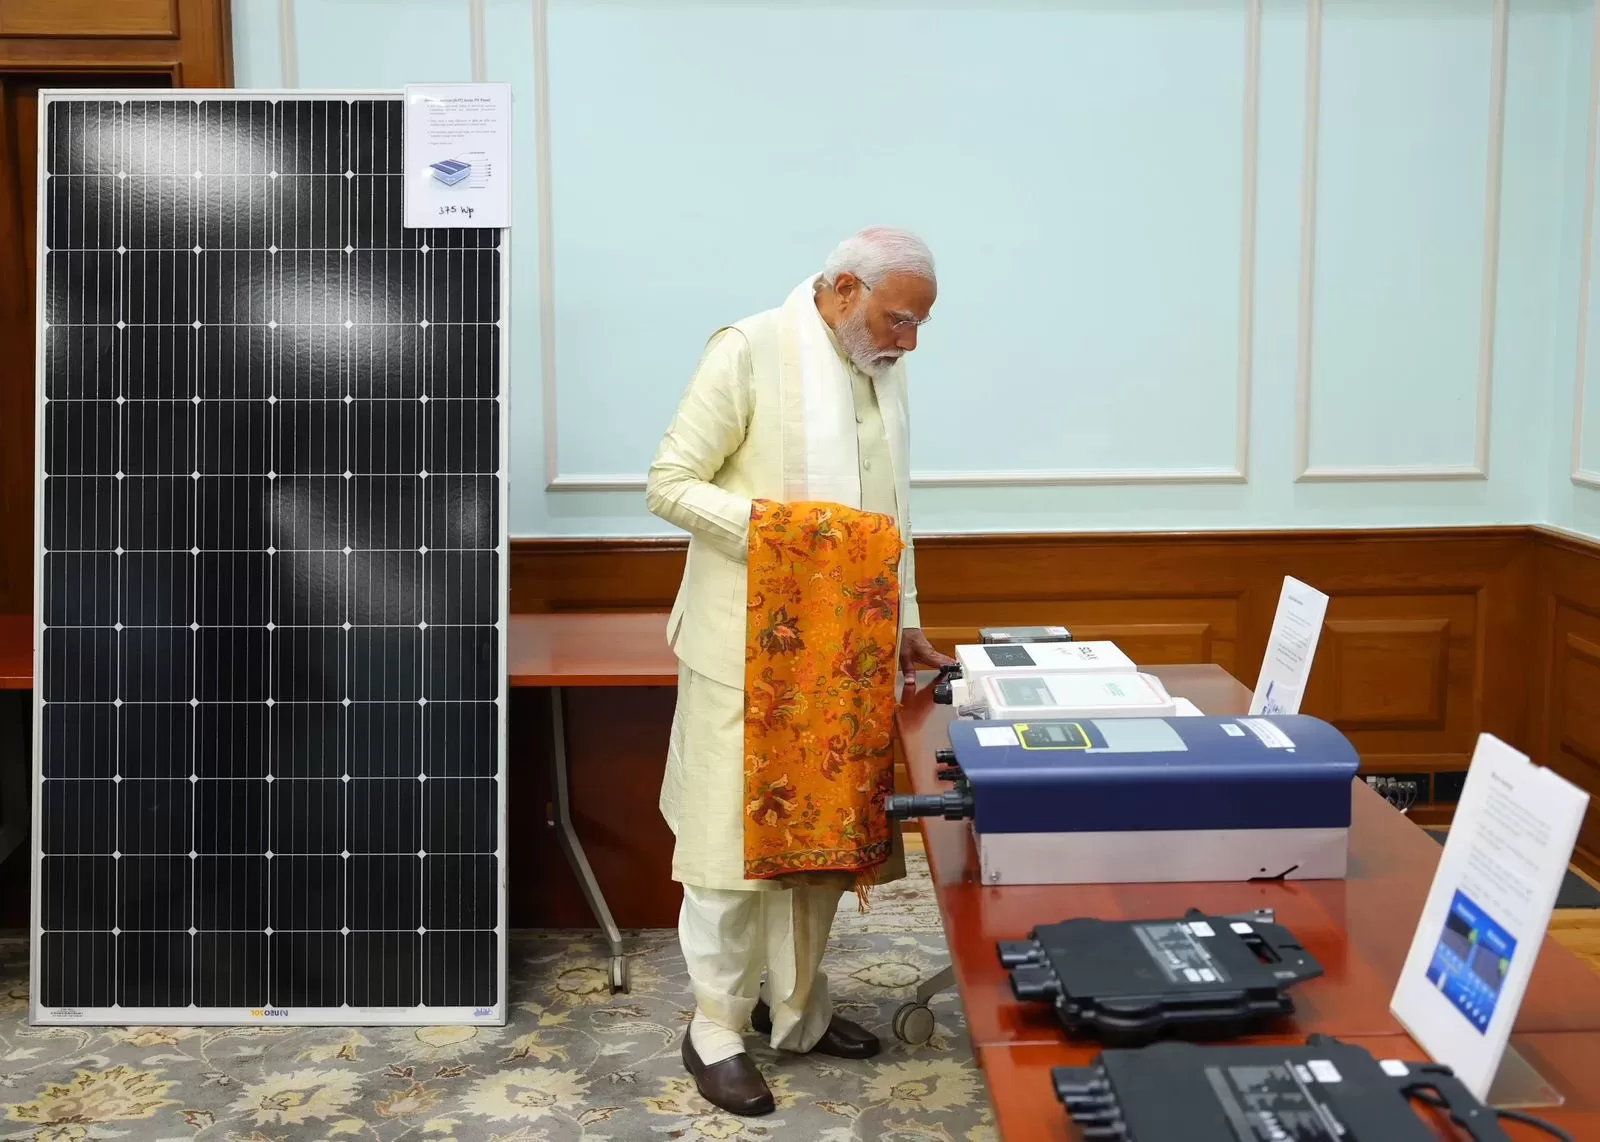 Pradhan Mantri Suryodaya Yojana: Eligibility, Application Process, and India’s Solar Future